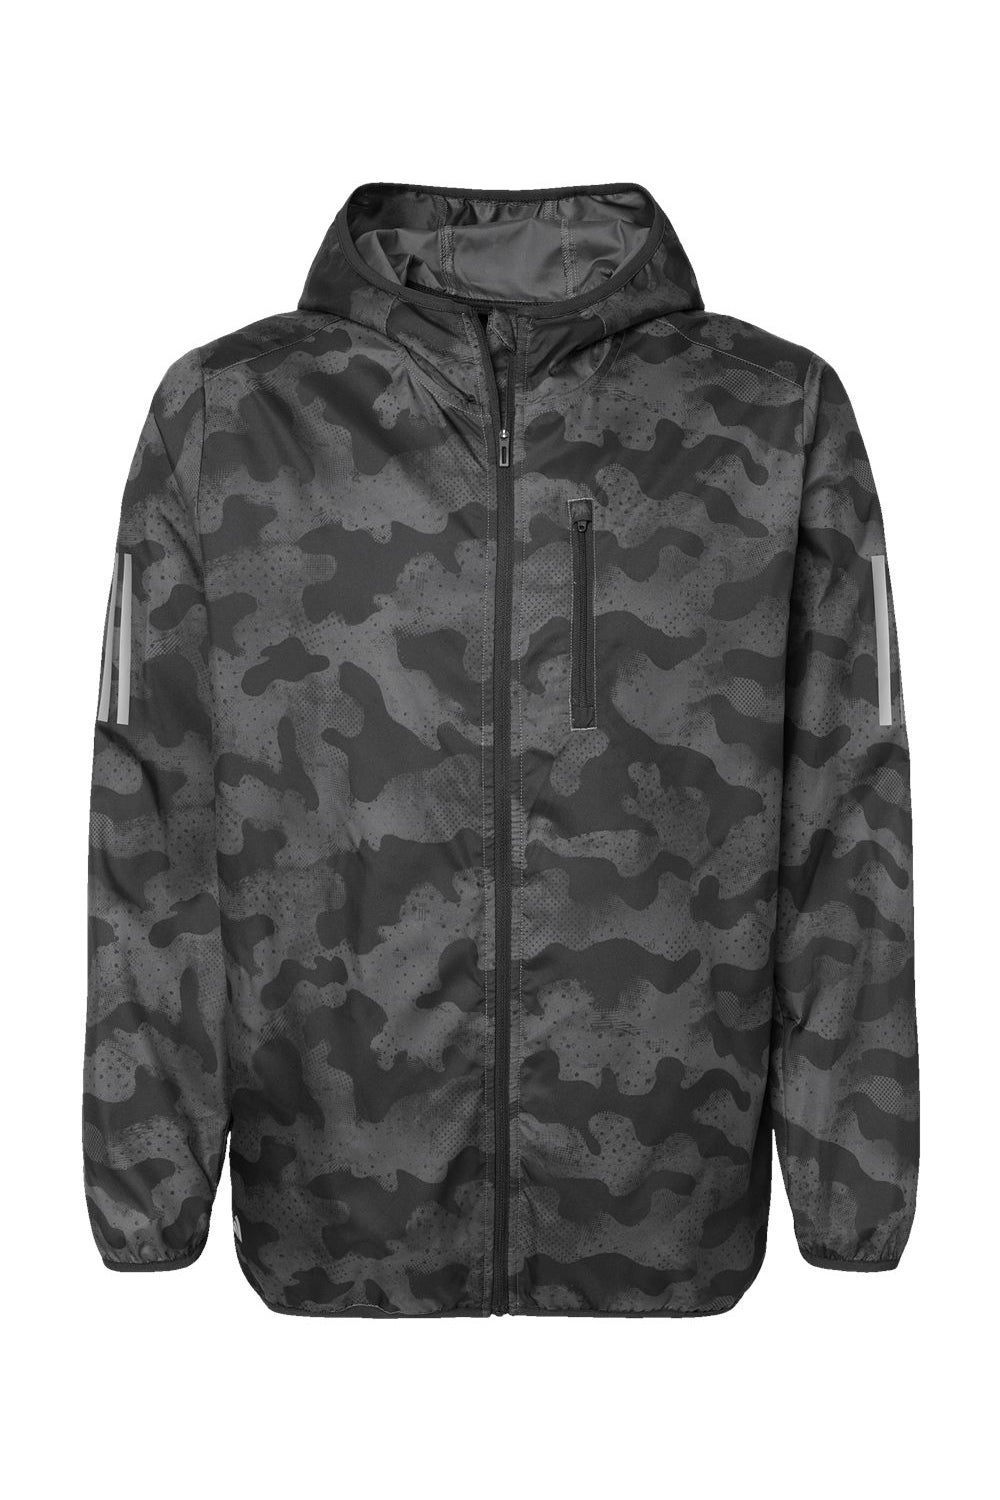 Adidas A524 Mens Full Zip Hooded Windbreaker Jacket Grey/Black Flat Front